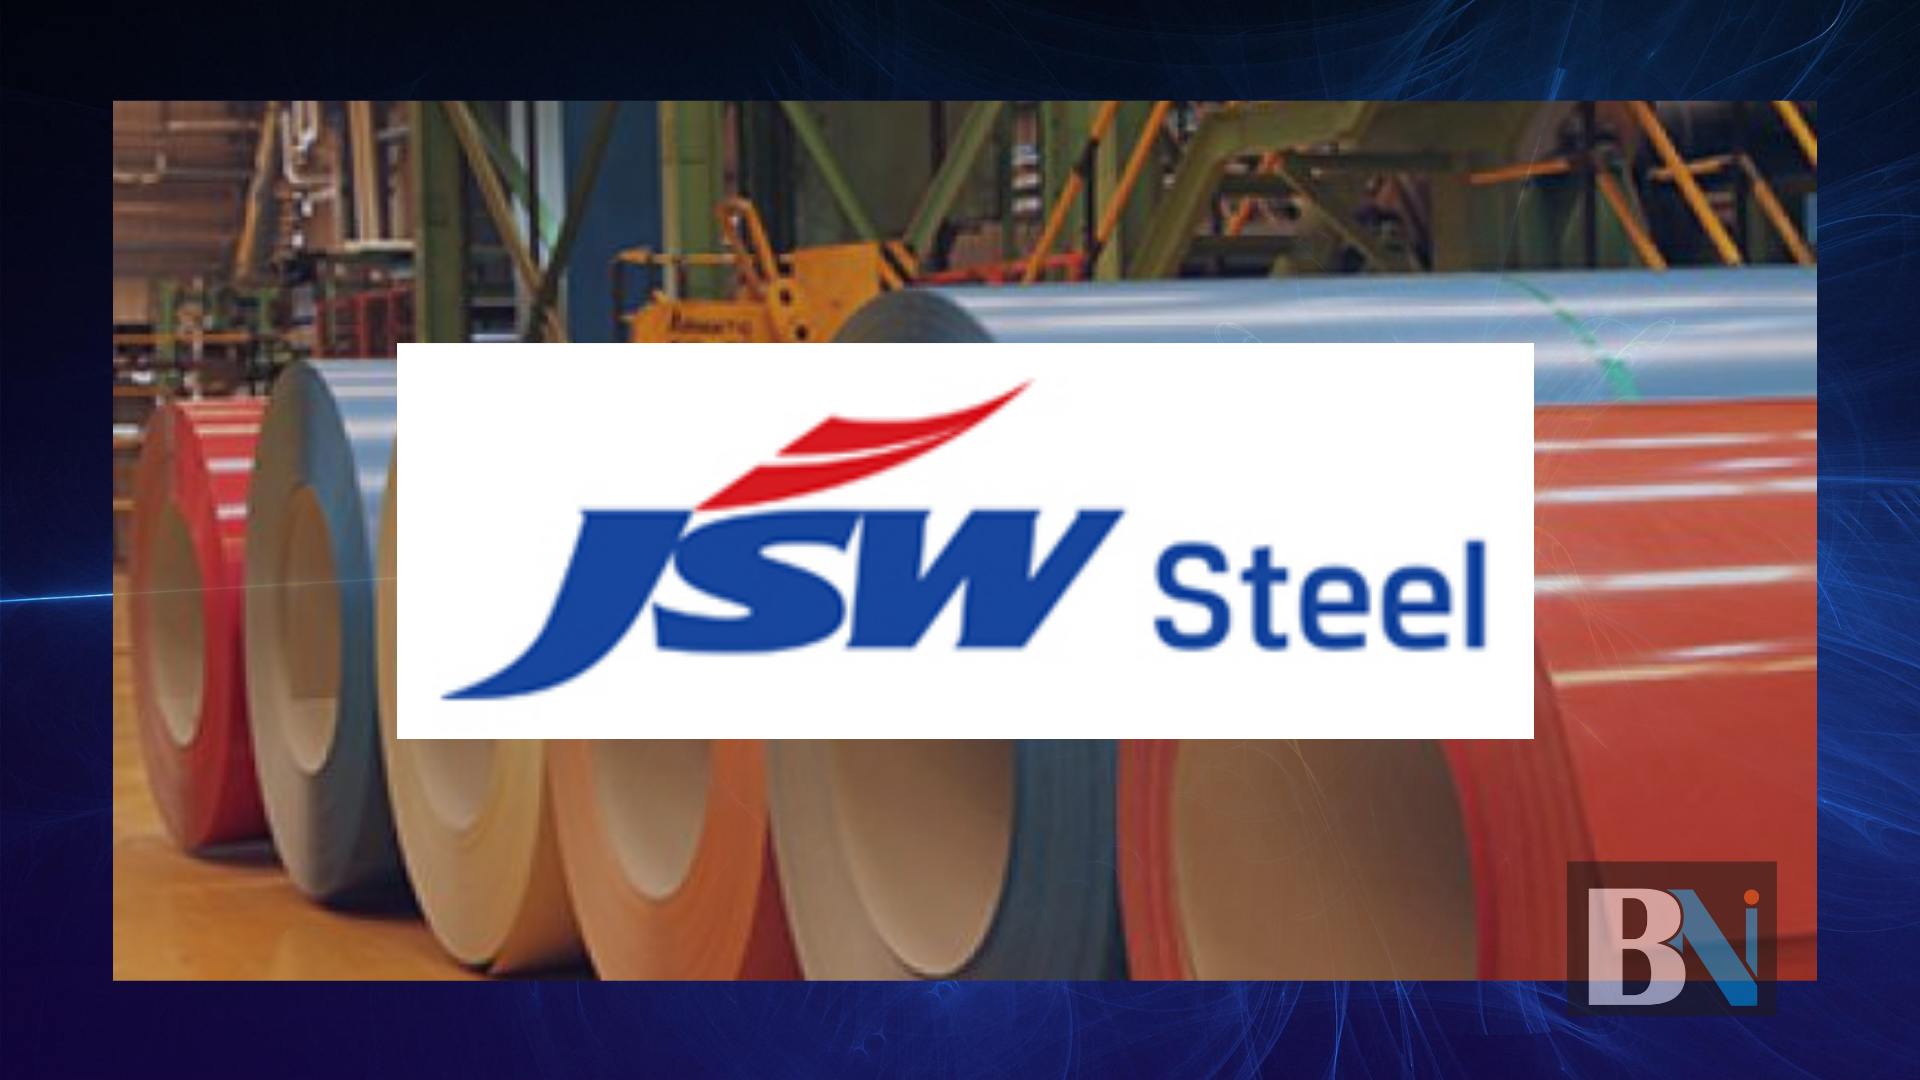 JSW Privilege Club by JSW Steel Limited